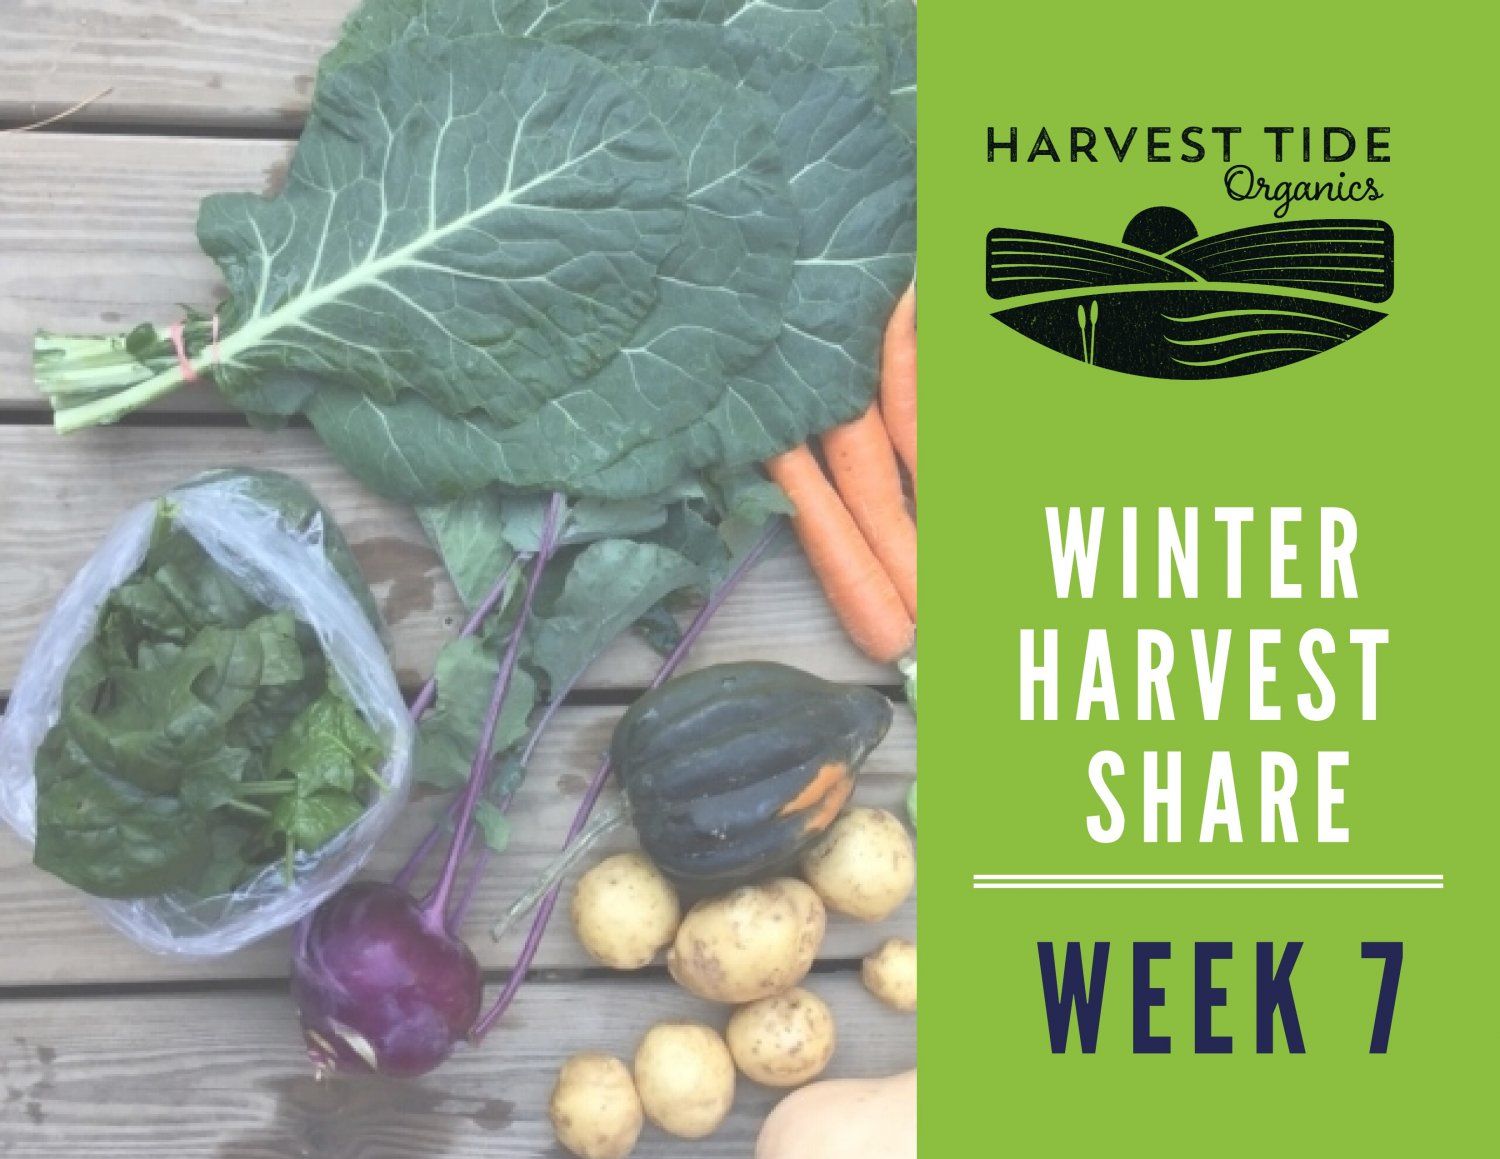 Next Happening: Winter Harvest Share - Week 7